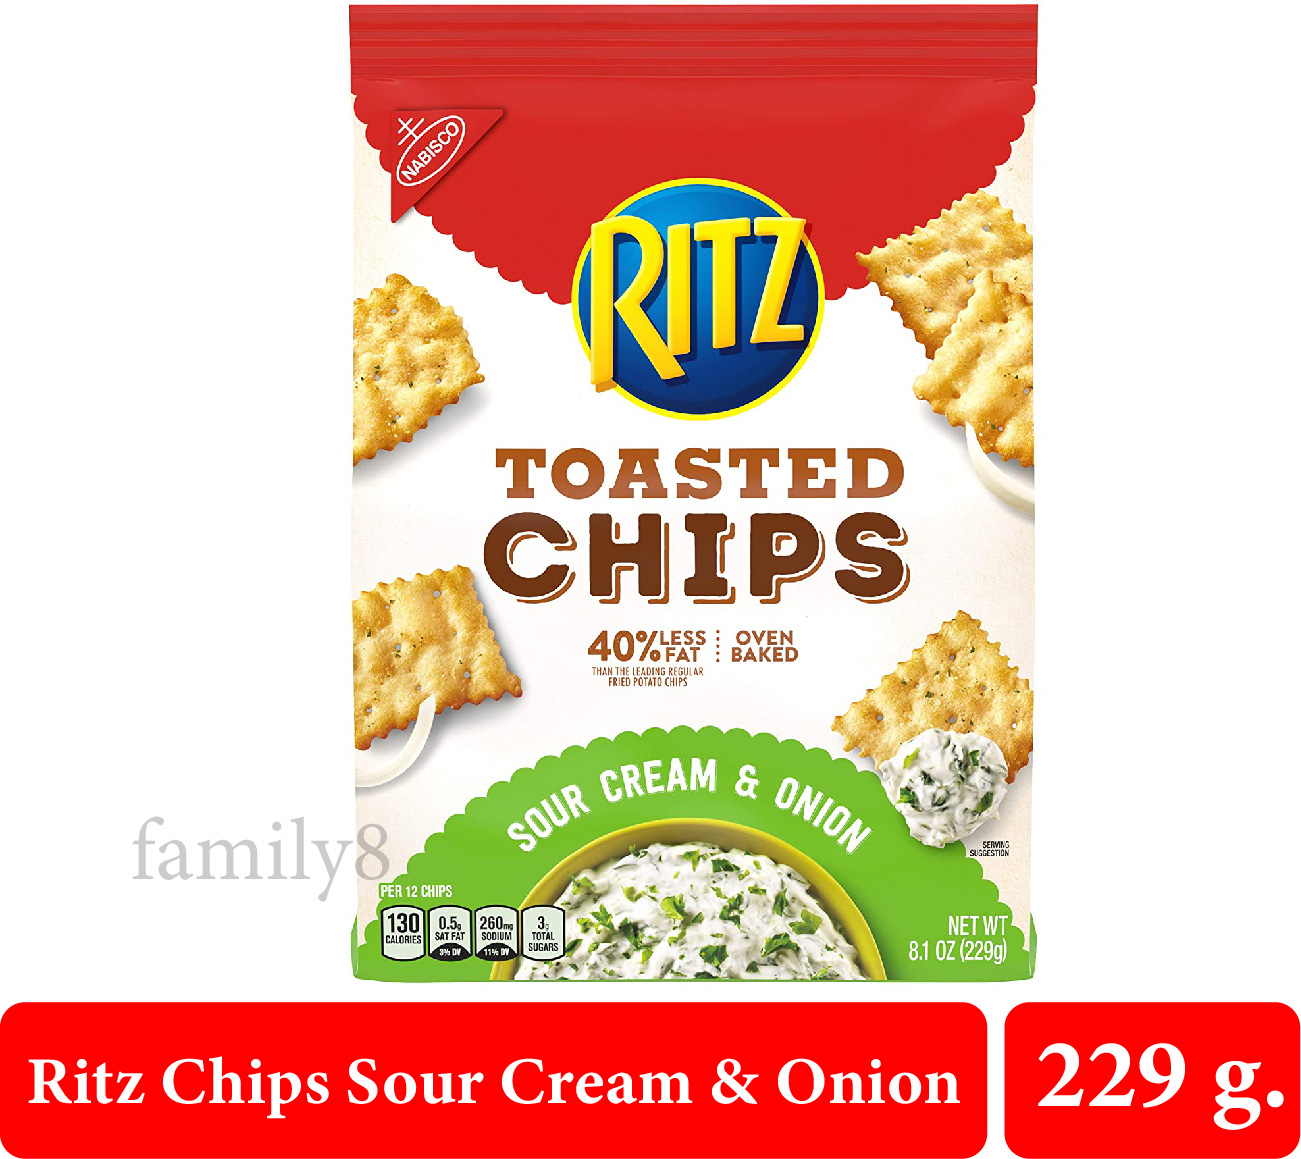 Ritz Chips Sour Cream & Onion 229 gram😊 แครกเกอร์อบกรอบ รสซาวร์ครีมและหัวหอม ตรา ริทซ์ 😊 โทสต์ ชิพส์ สวีท โฮม ซาวร์ ครีม แอนด์ ออเนี่ยน 😍พร้อมส่ง!!